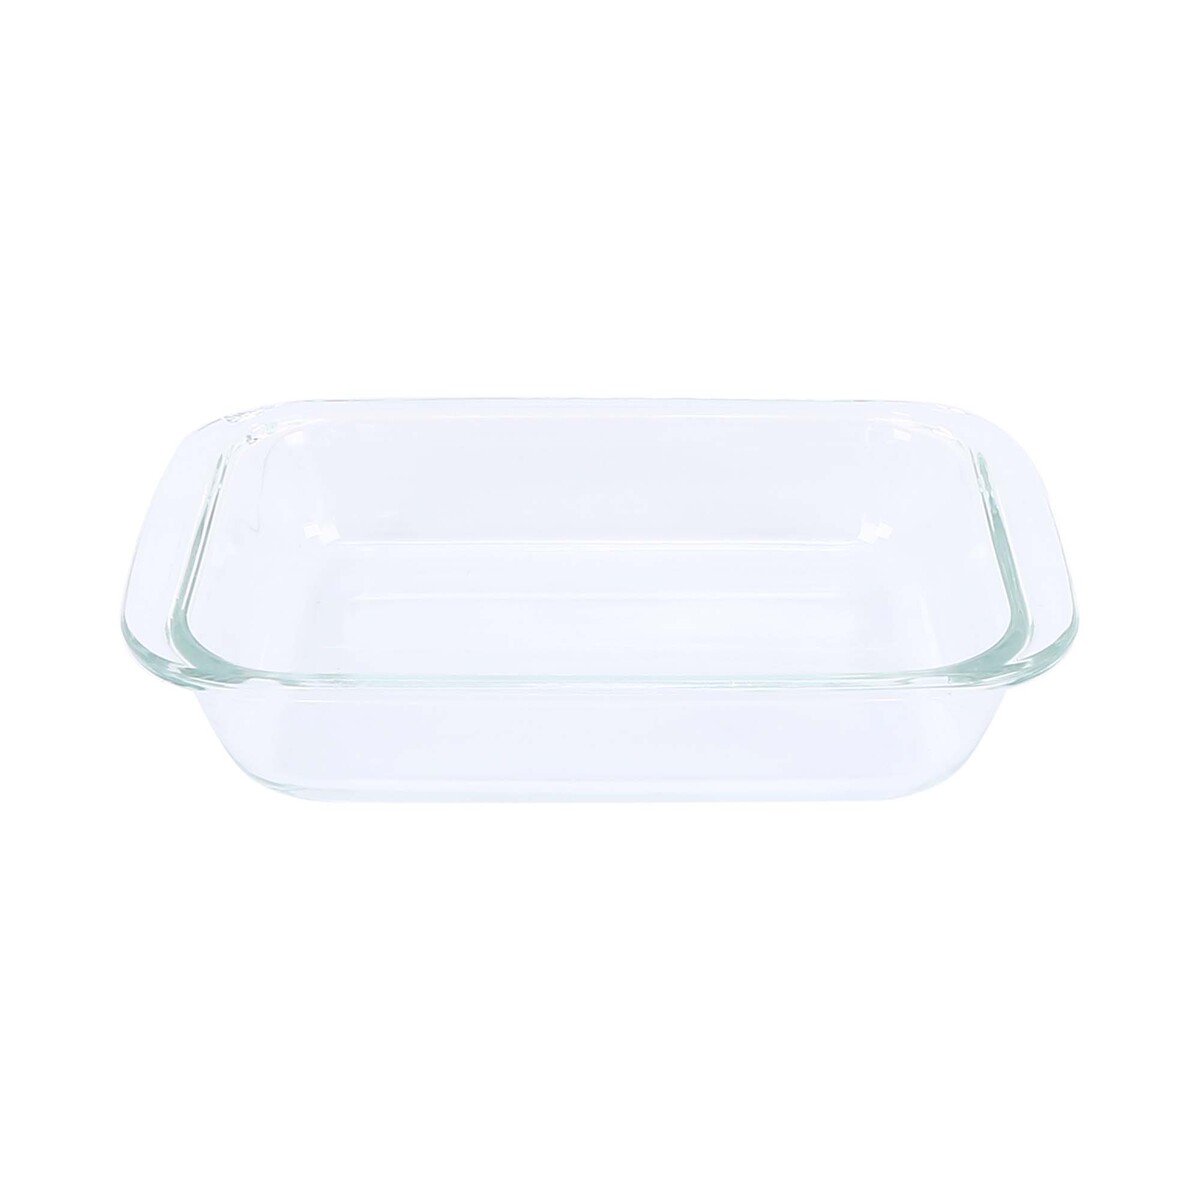 Chefline HSAP18L Borosilicate Glass Rectangle Baking Dish, 1.5 Litre, Transparent